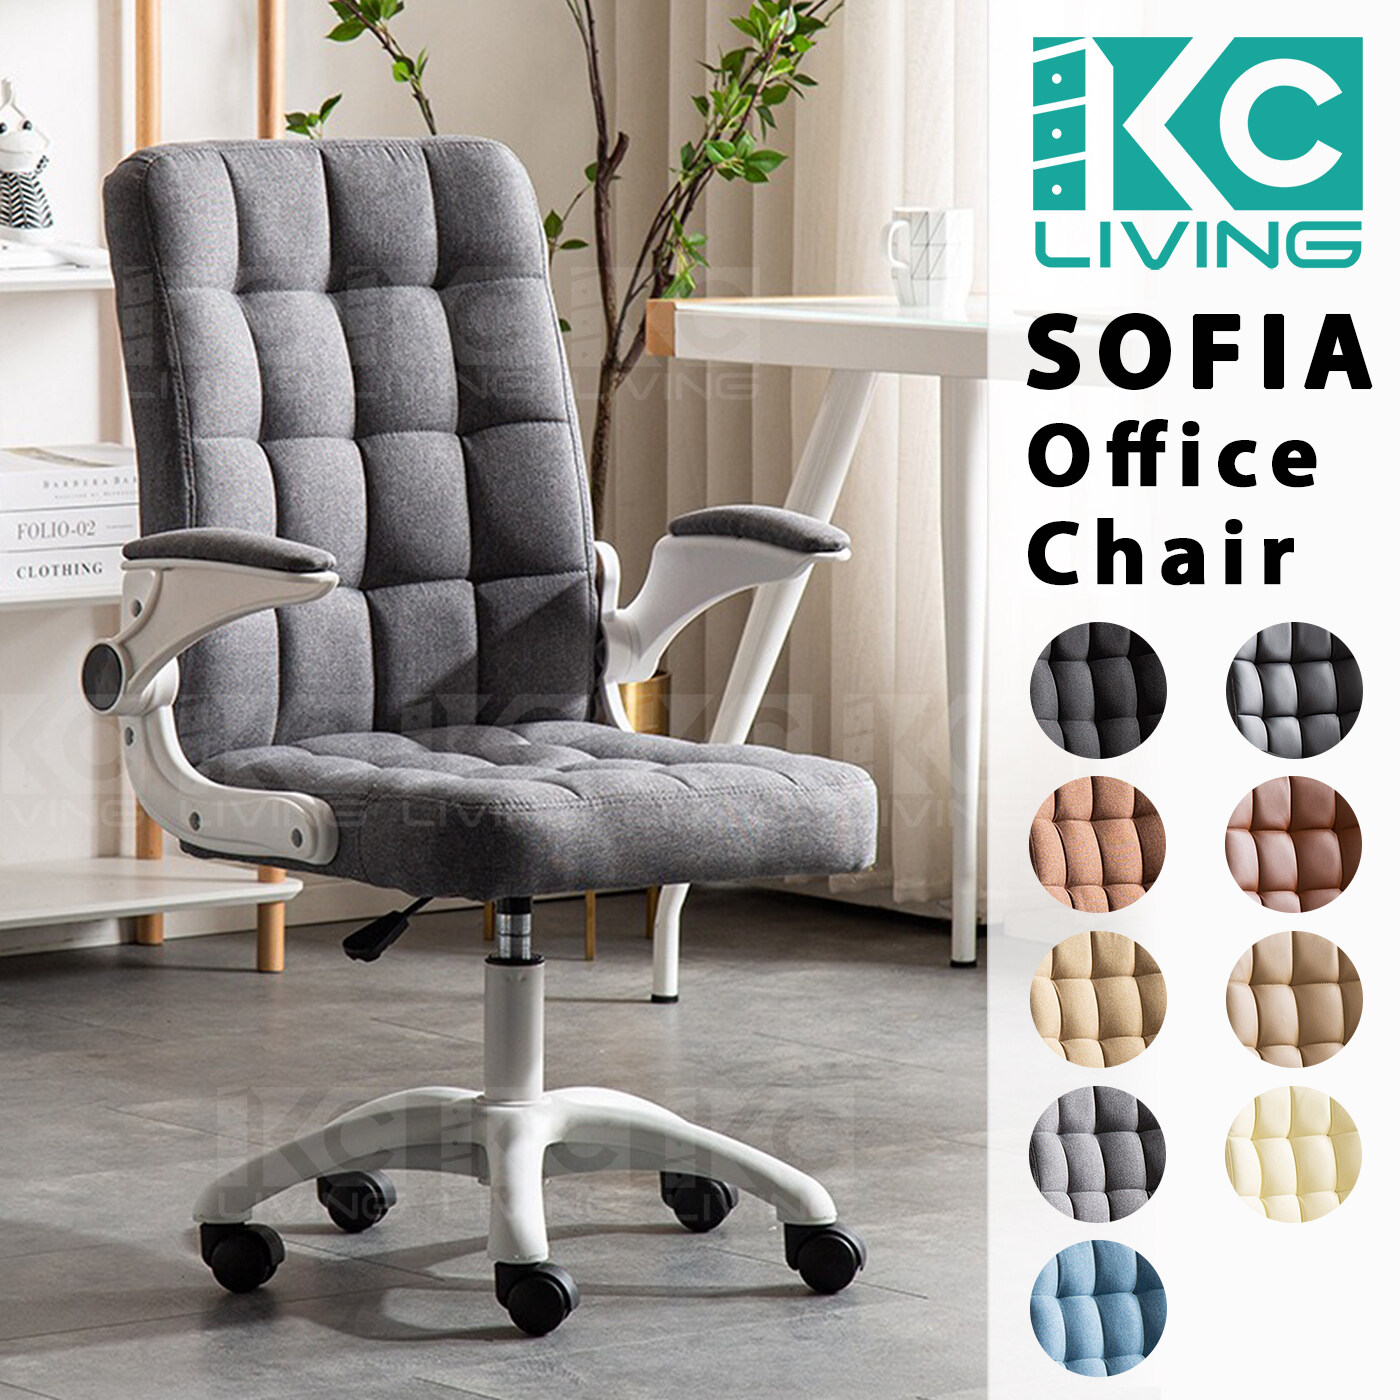 [KCL] Sofia Office Chair/ High Density Foam/ Fabric PU/ Retractable Armrest/ Handle/ Study Chair/ Gaming Chair/ Kerusi Belajar/ Murah/ Tahan/ Kerja/ Beroda/ Roda/ Kain/ Murah